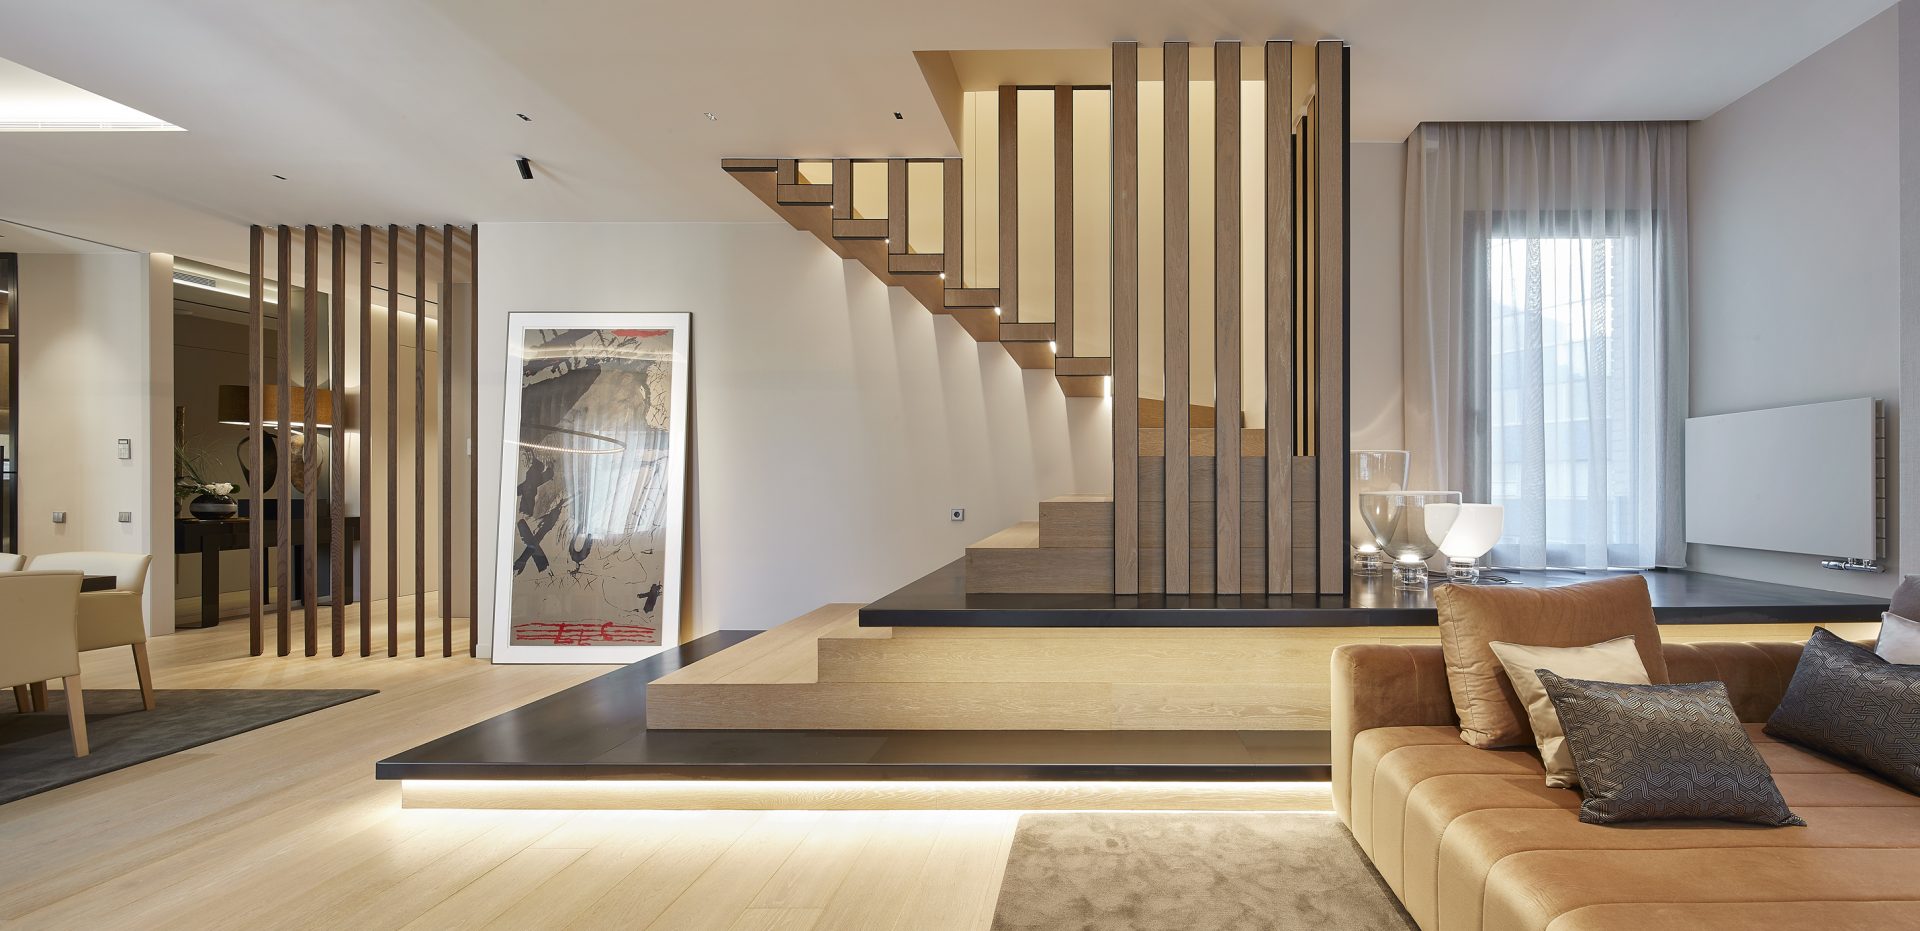 Luxury Residential Interior Designs